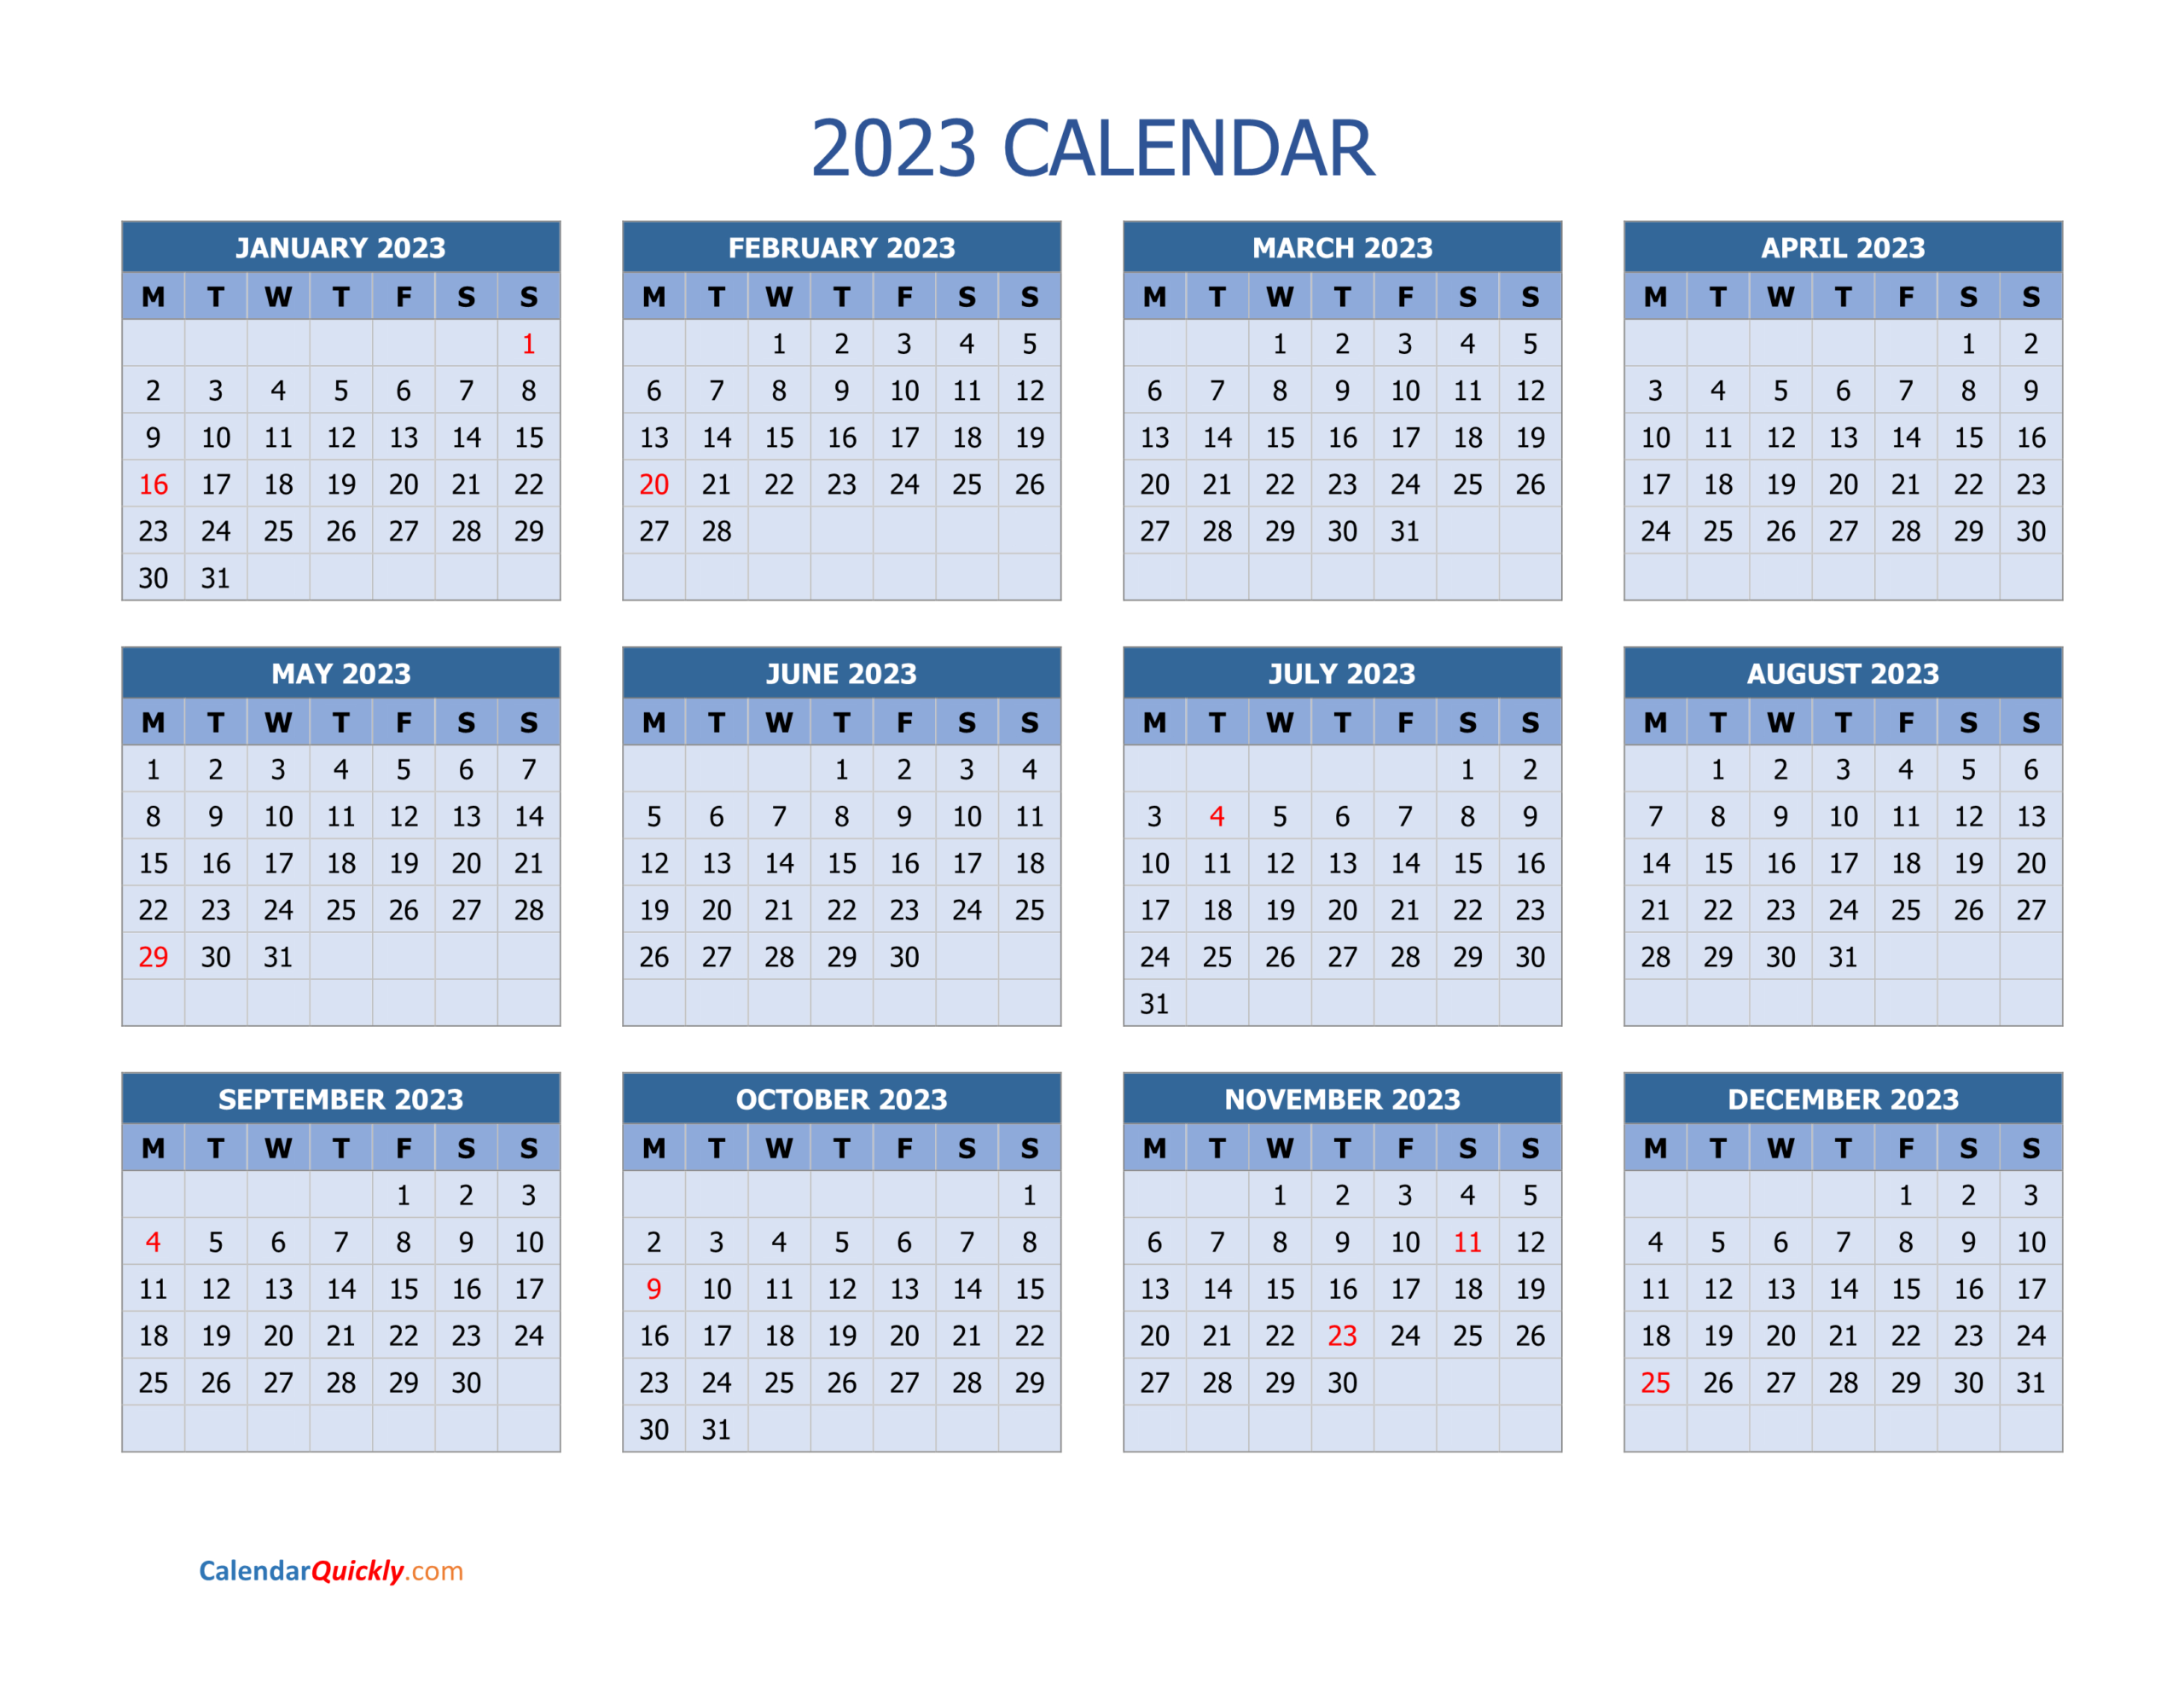 Monday 2023 Calendar Horizontal | Calendar Quickly